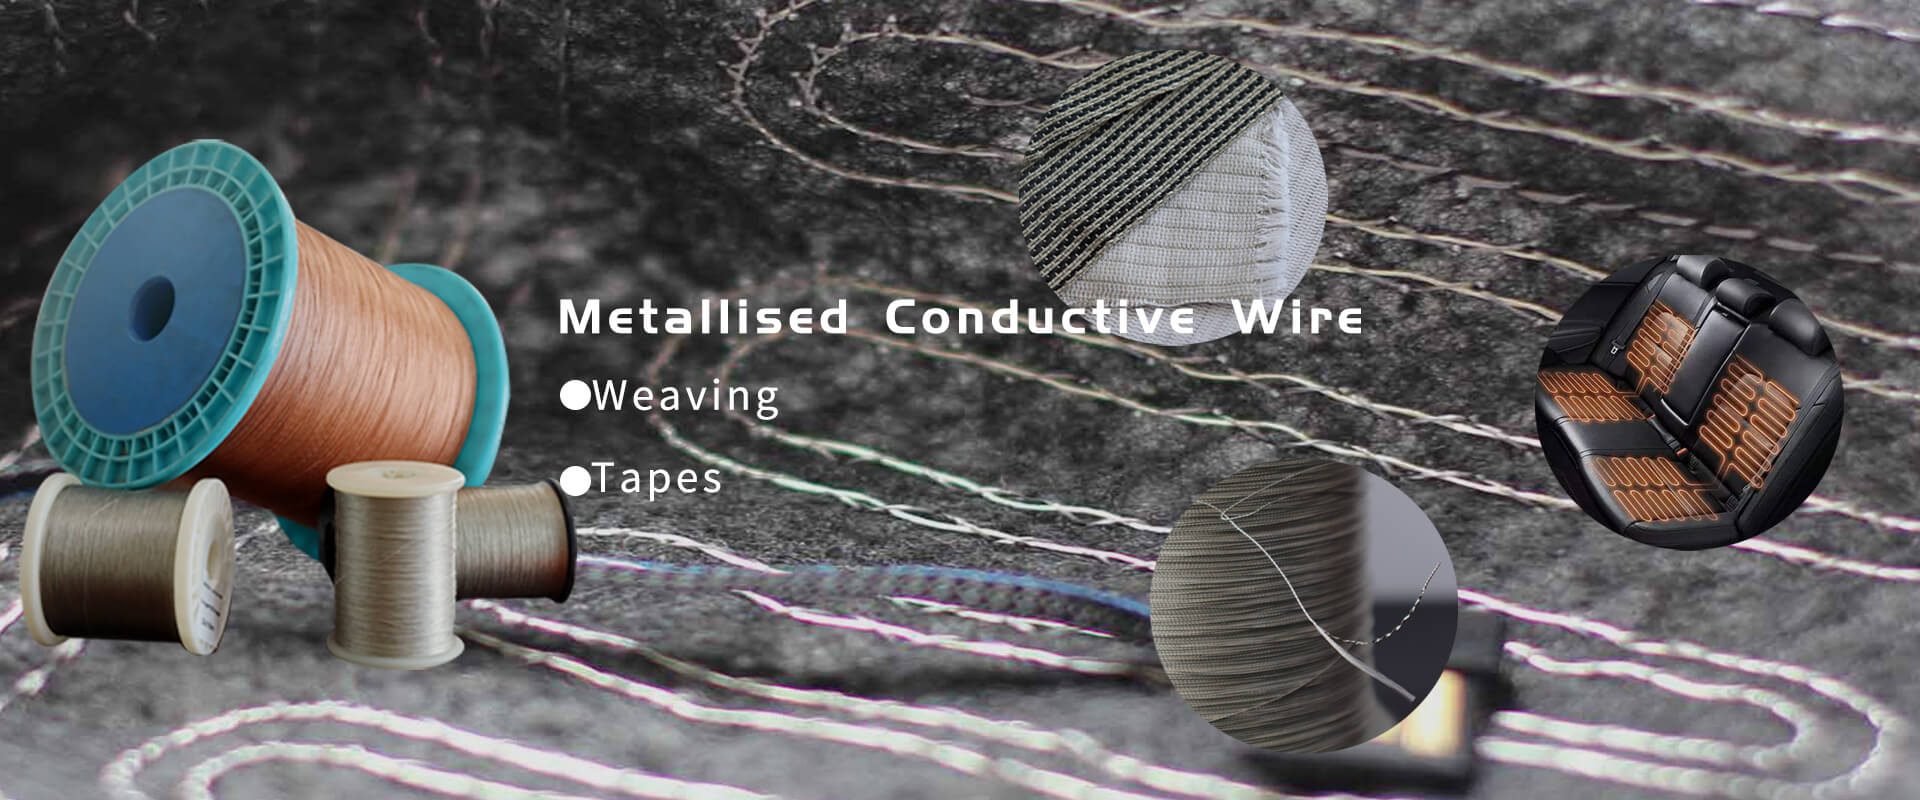 heating yarn<br>tensil wire<br>metallized yarn<br>metallized wire metallized yarn<br>metallized wire